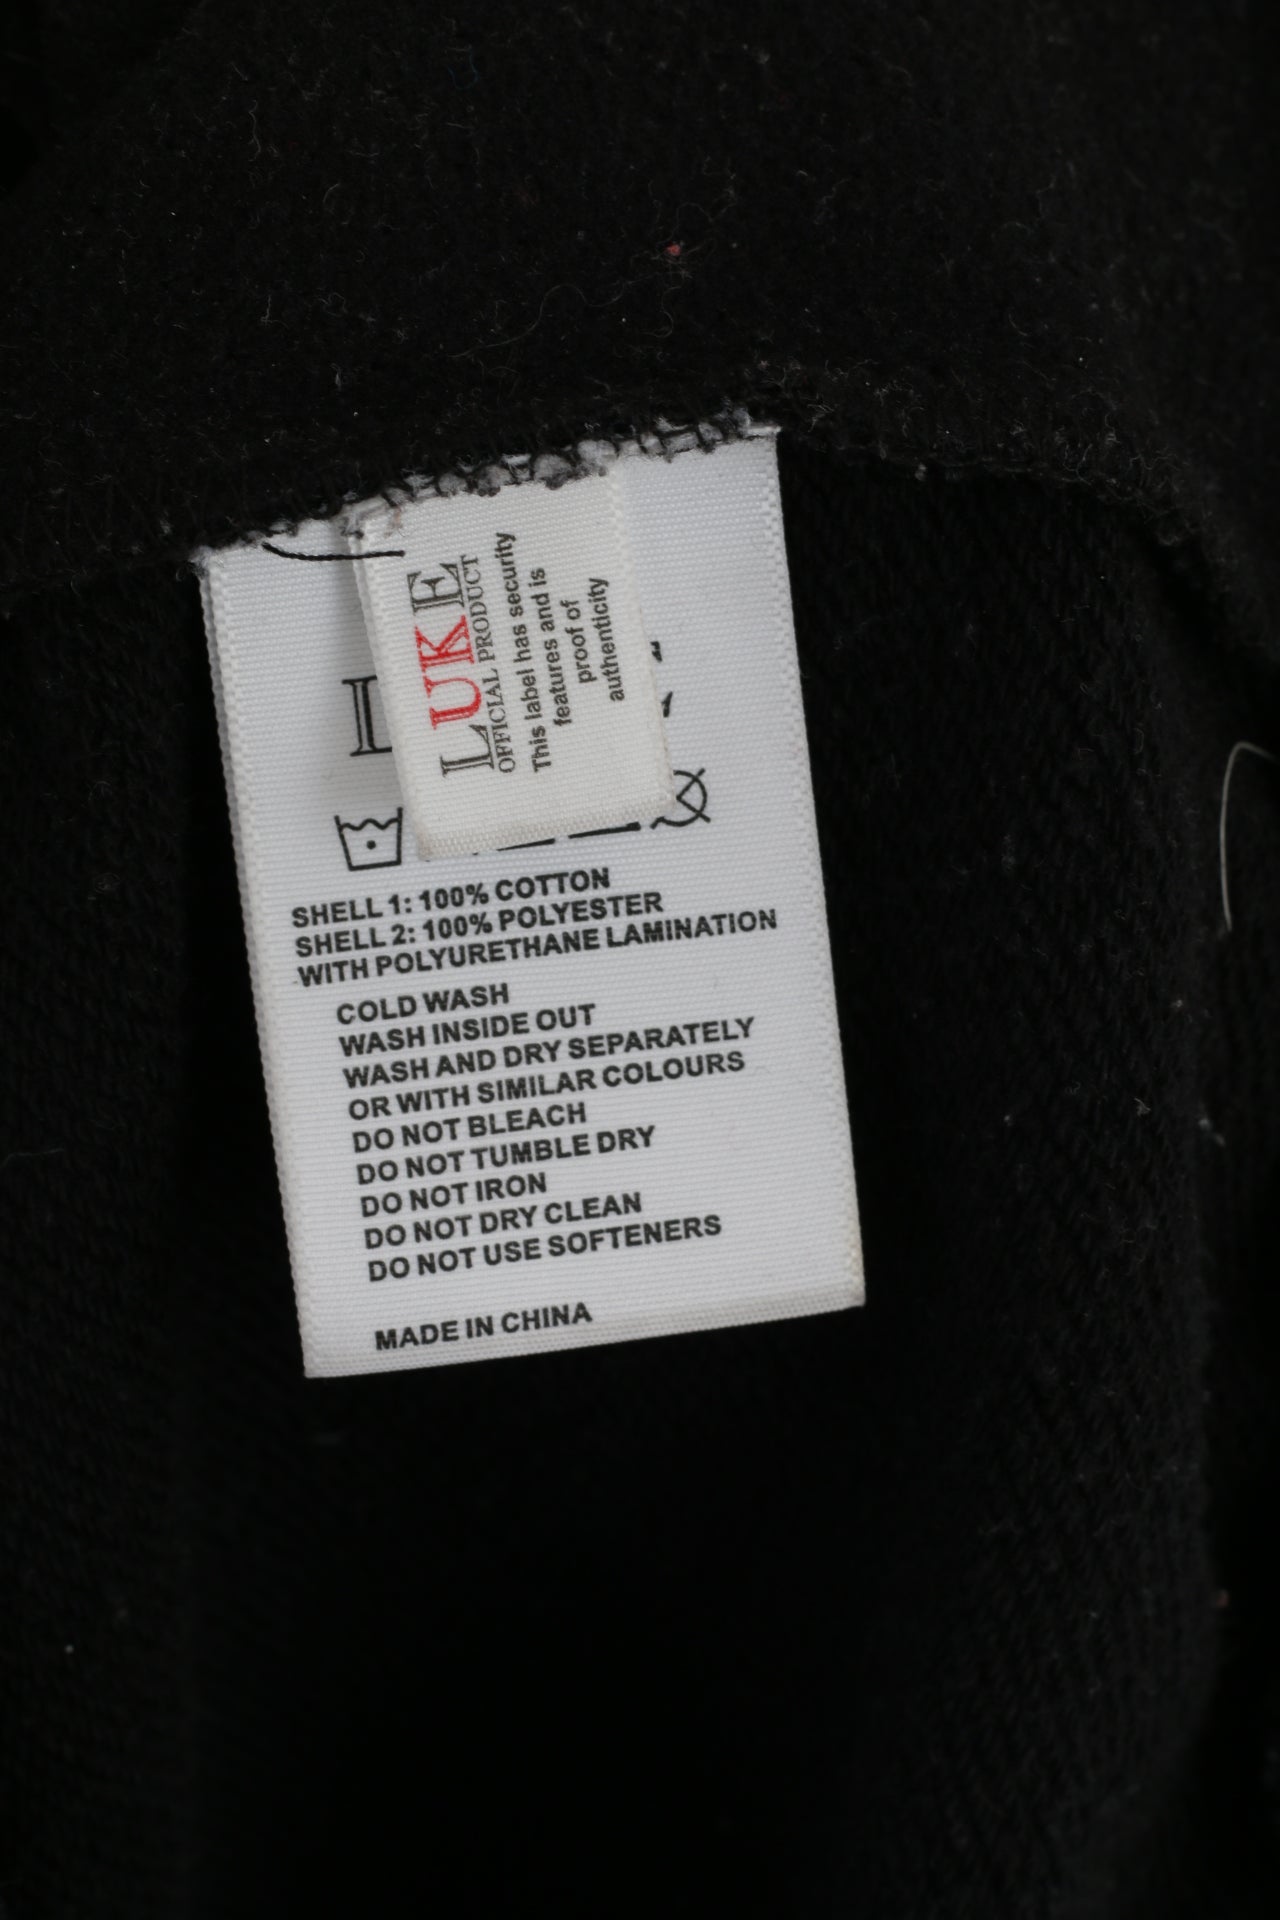 Luke 1977 Men M Sweatshirt Black Cotton Front Lamination Premium Top